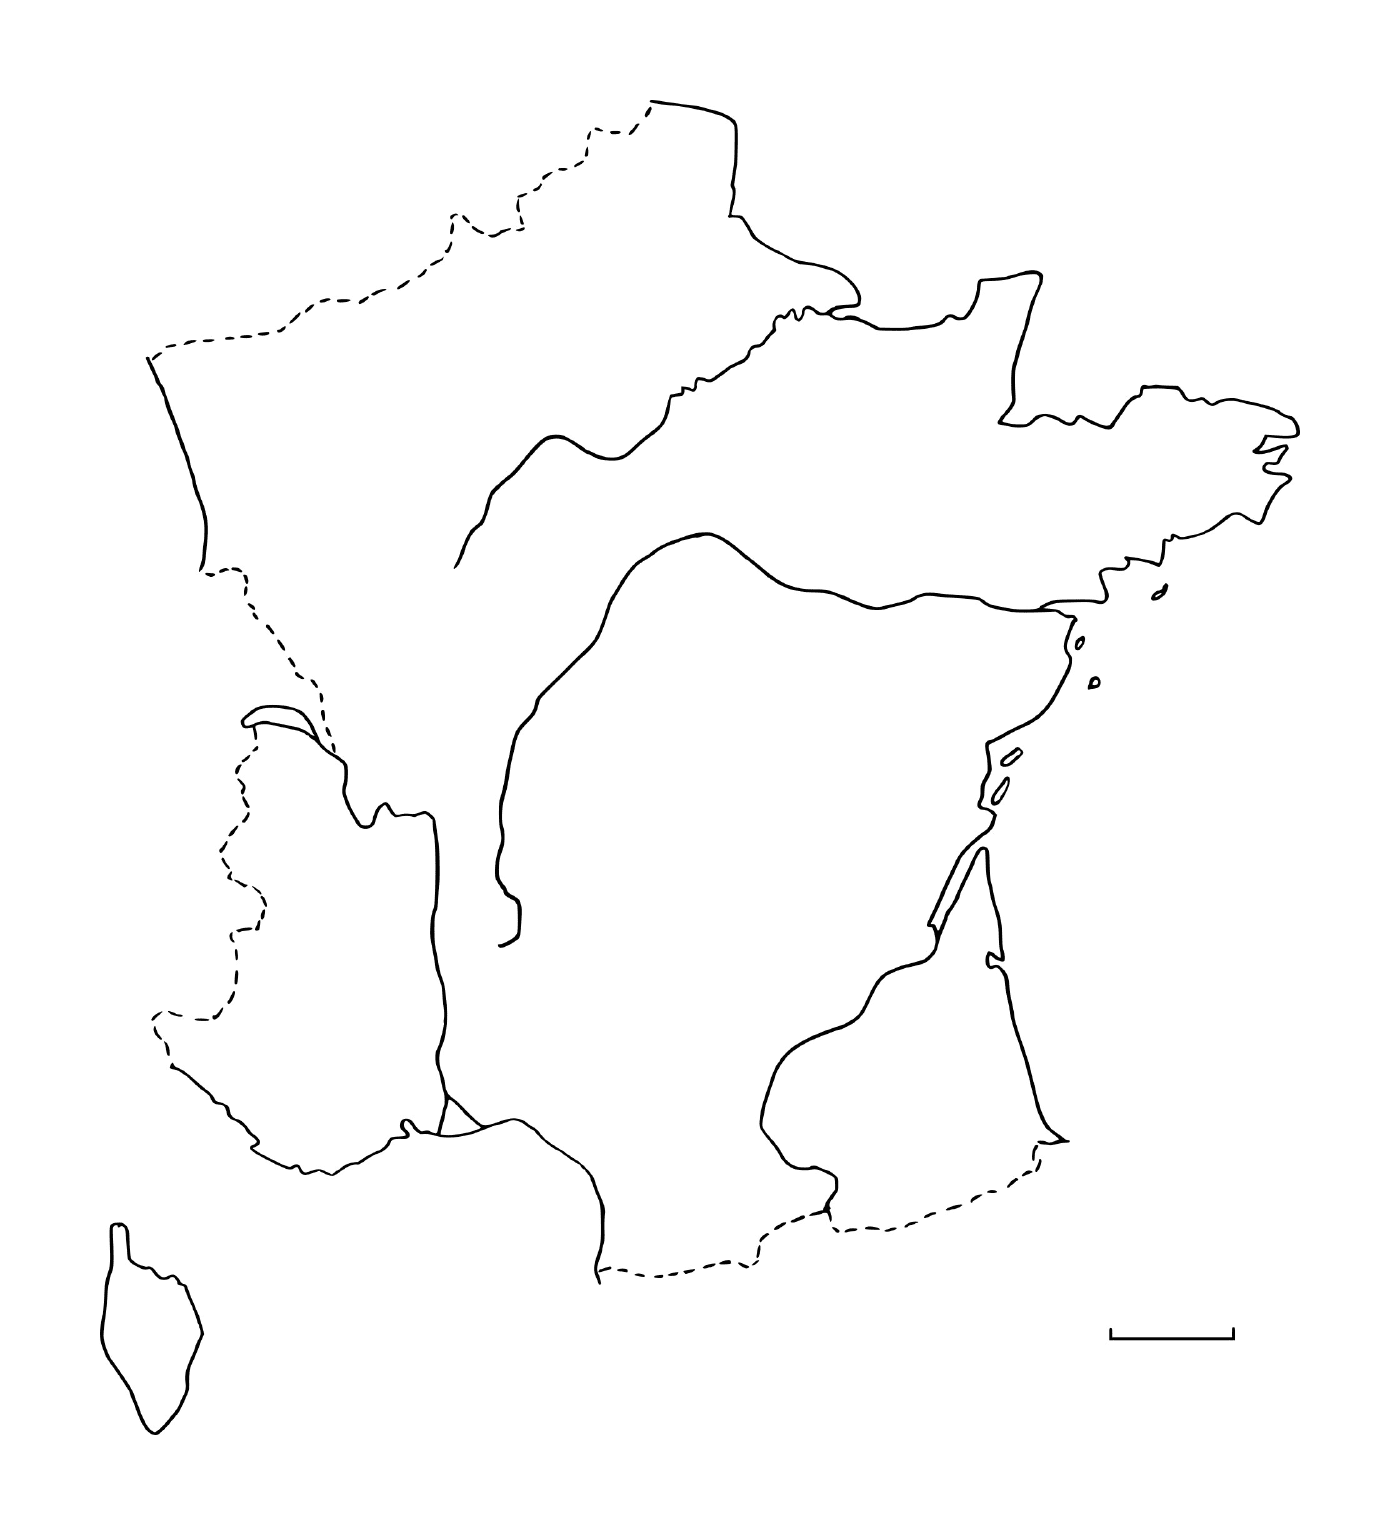  خريطة فرنسا 